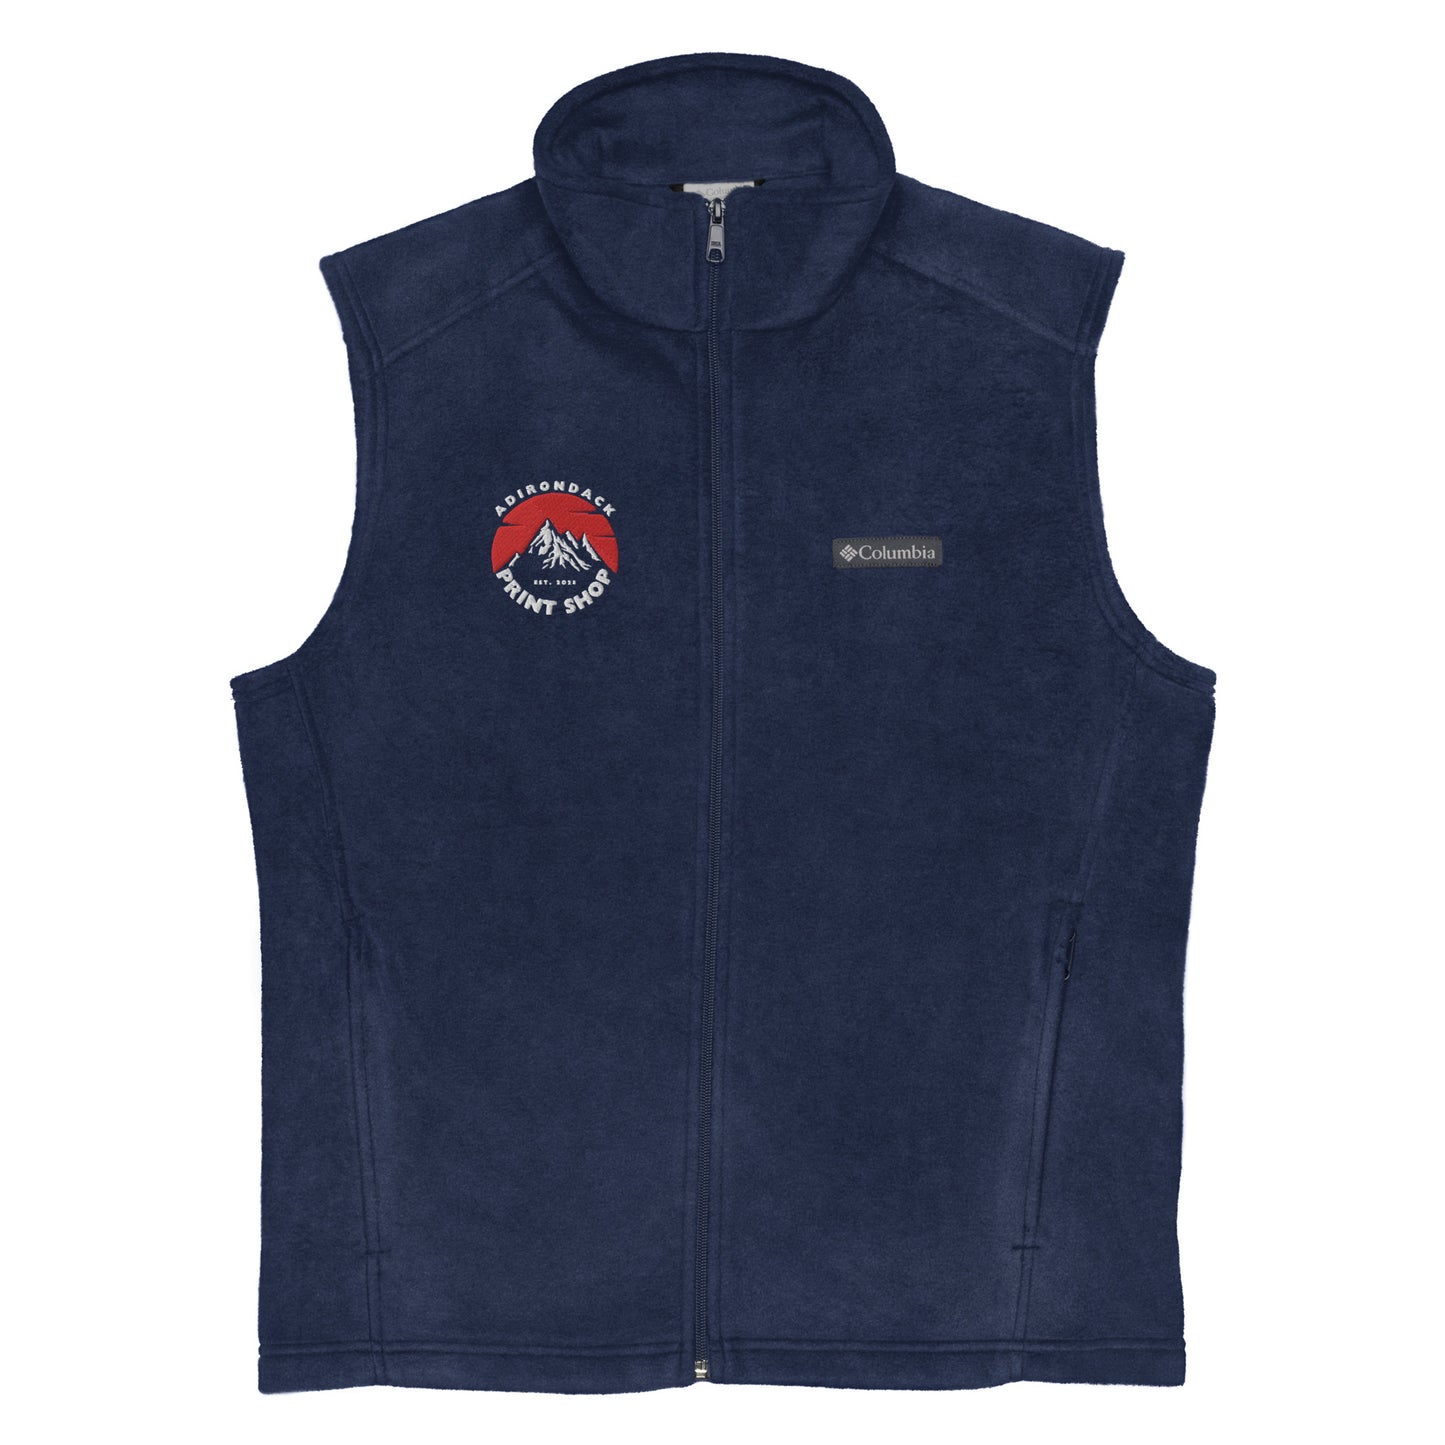 Adirondack Print Shop Men’s Columbia fleece vest